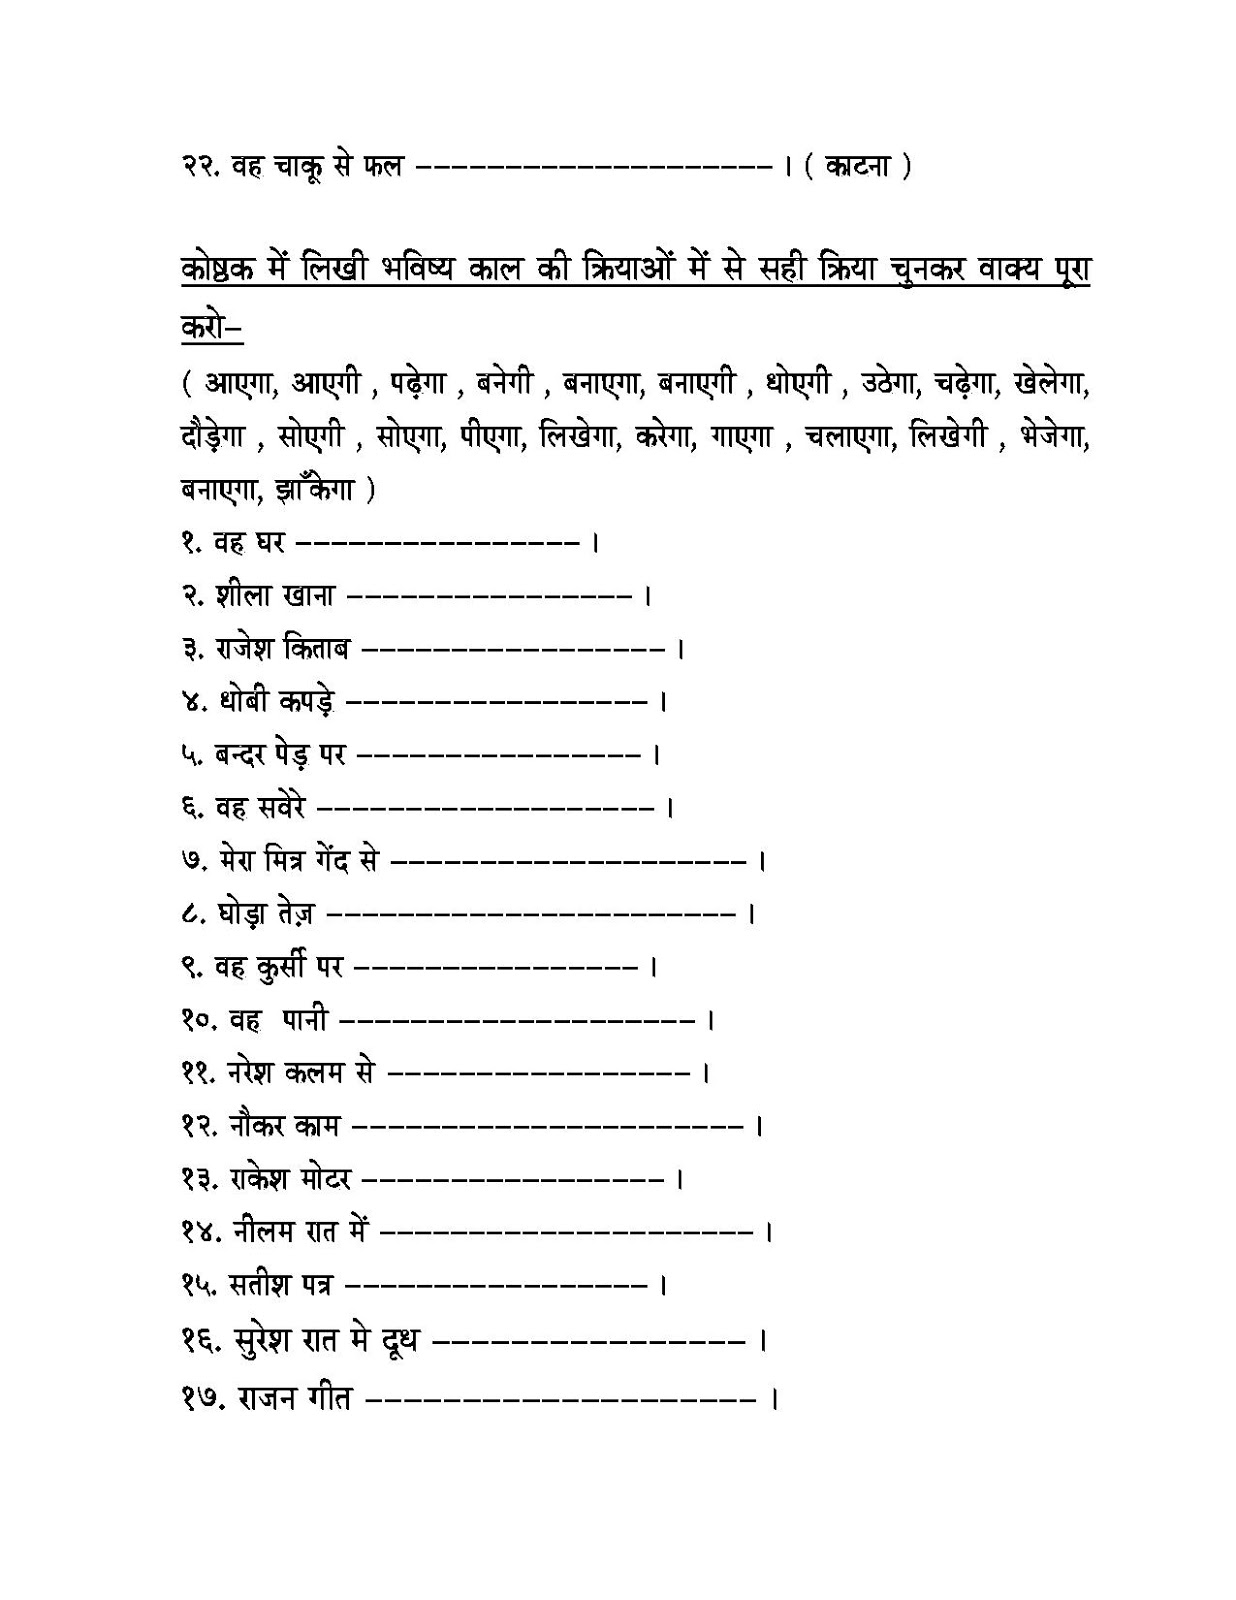 hindi-grammar-work-sheet-collection-for-classes-5-6-7-8-tenses-work-sheets-for-classes-3-4